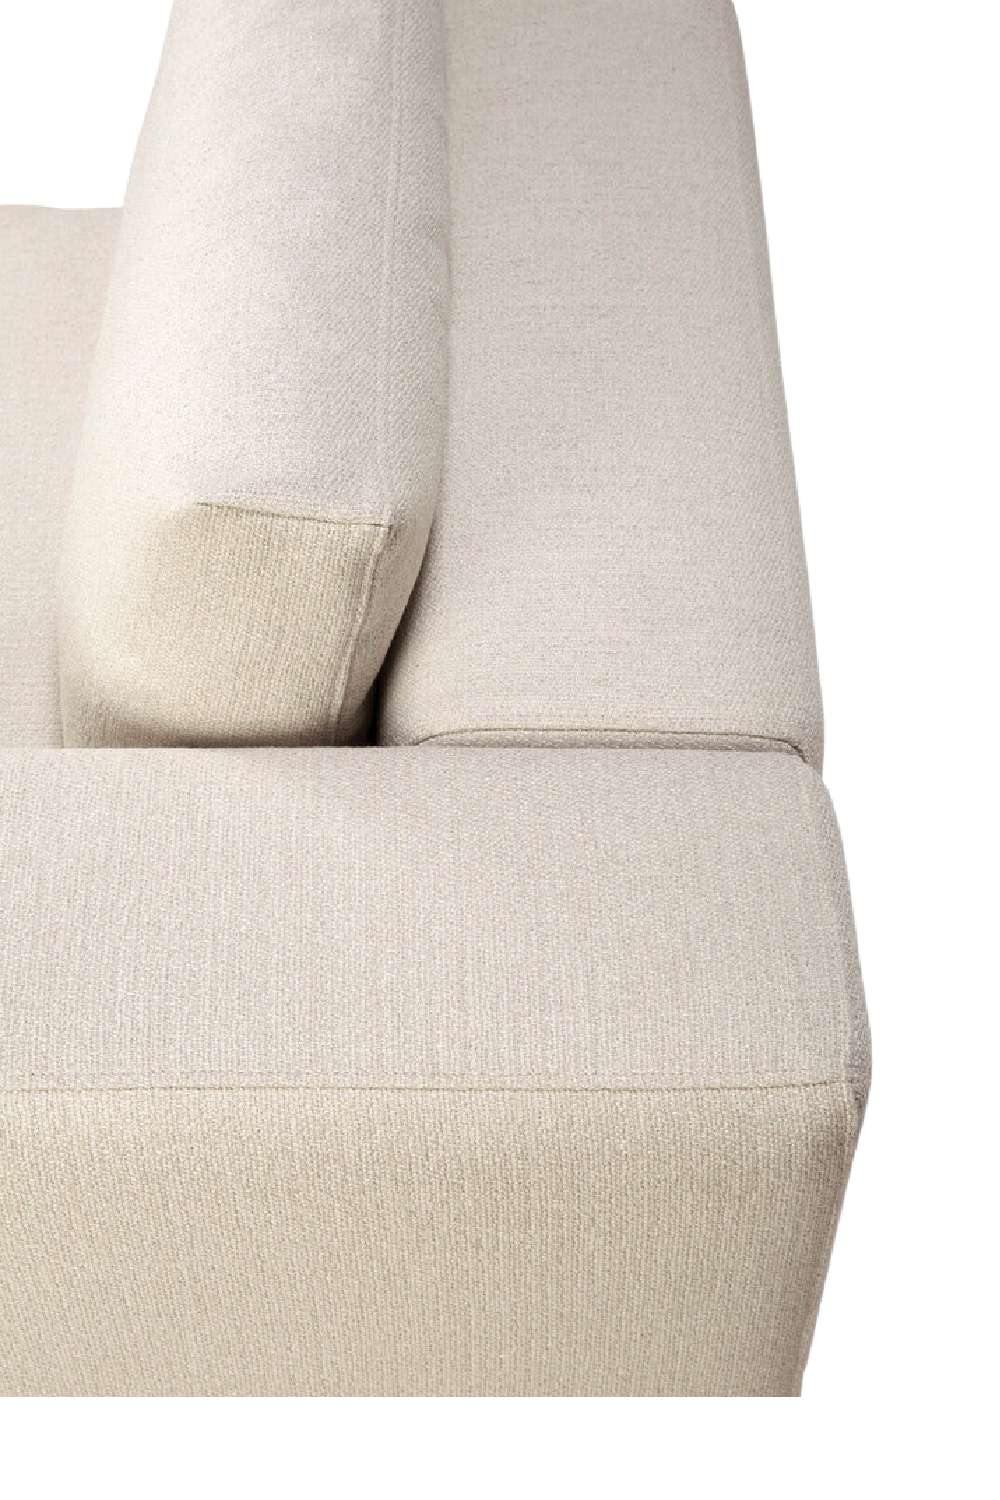 Off-White Modular Sofa | Ethnicraft Mellow | Oroa.com